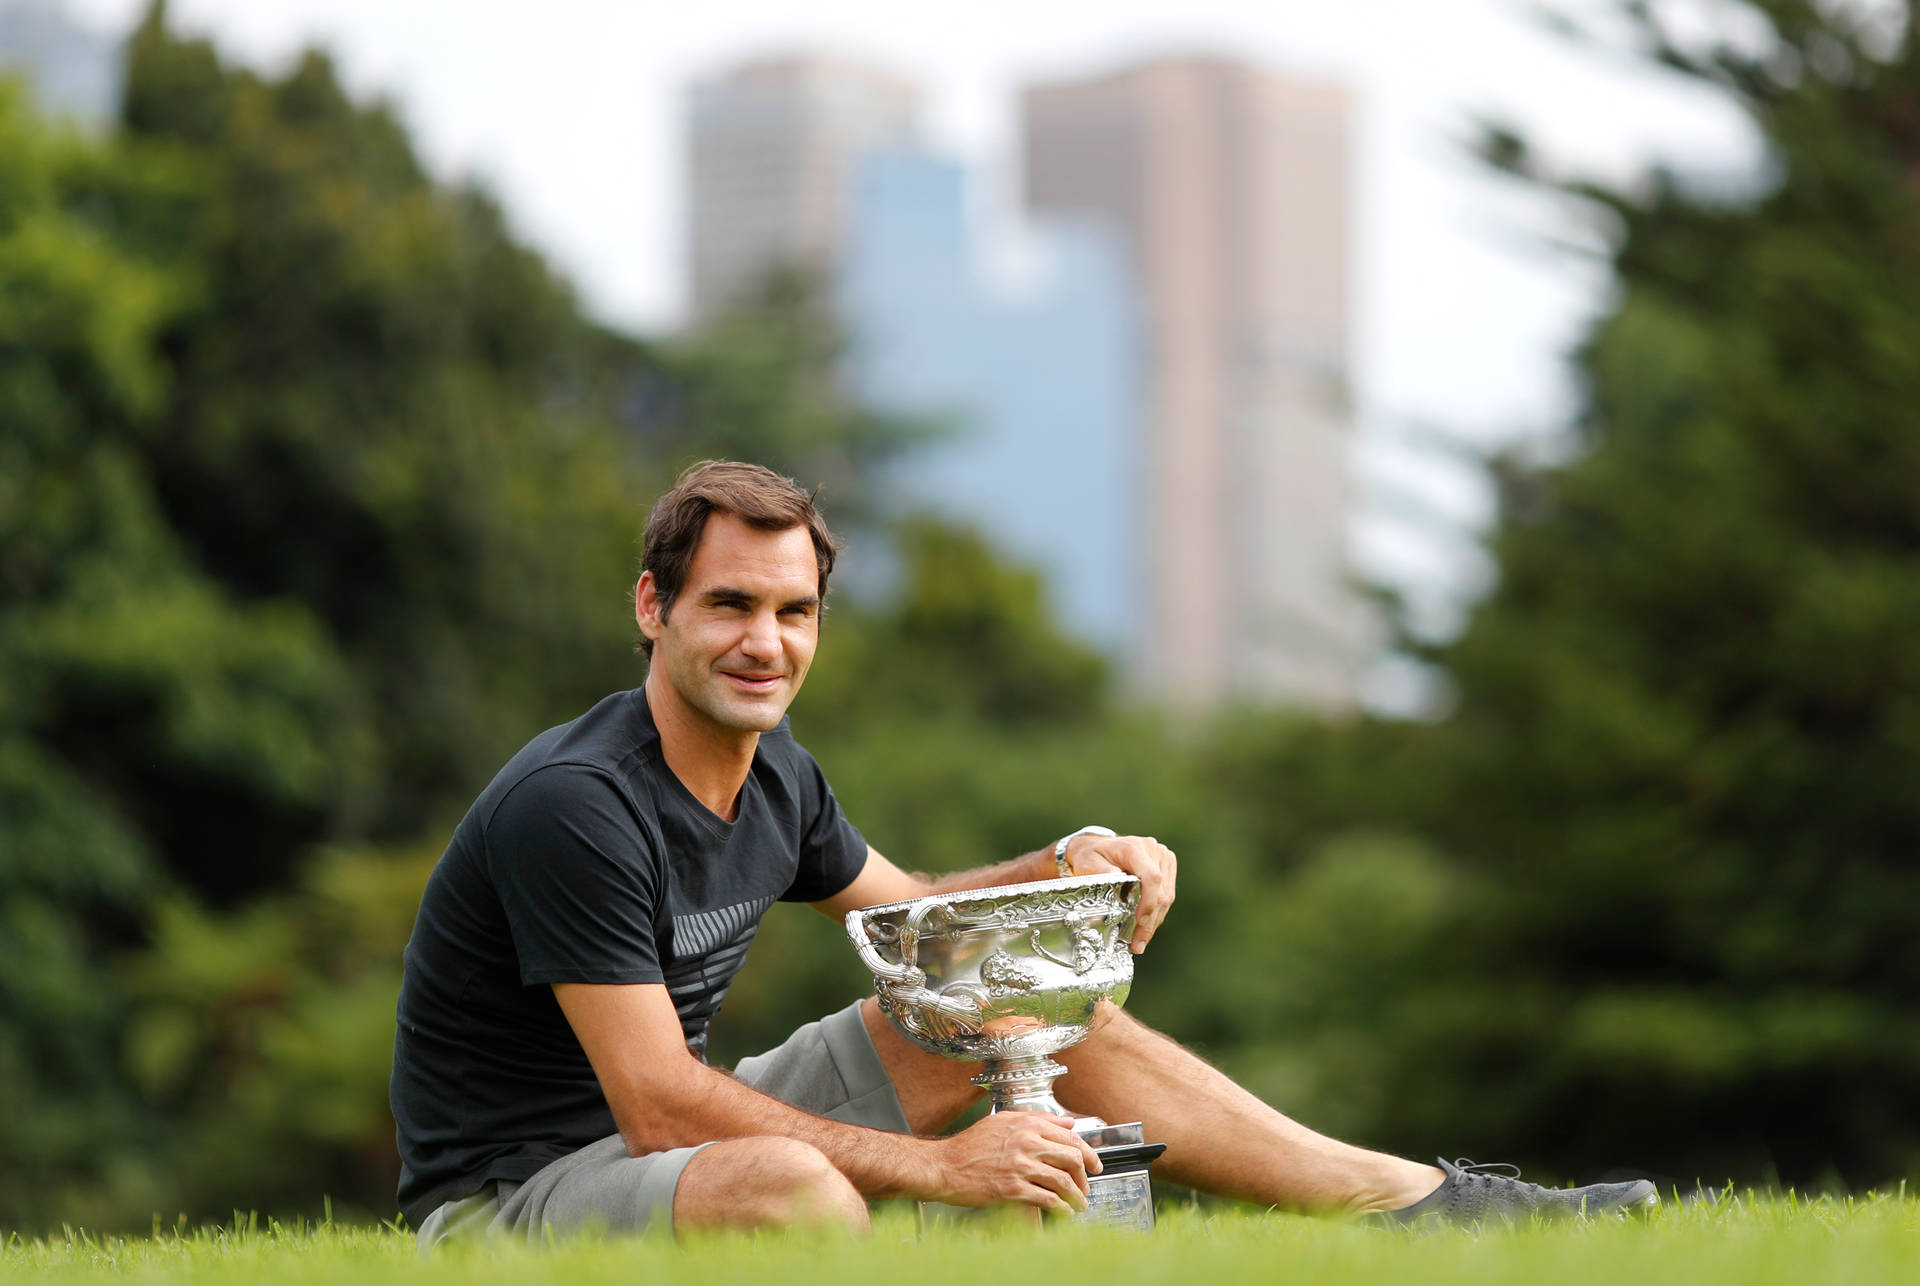 Professional Tennis Player Roger Federer